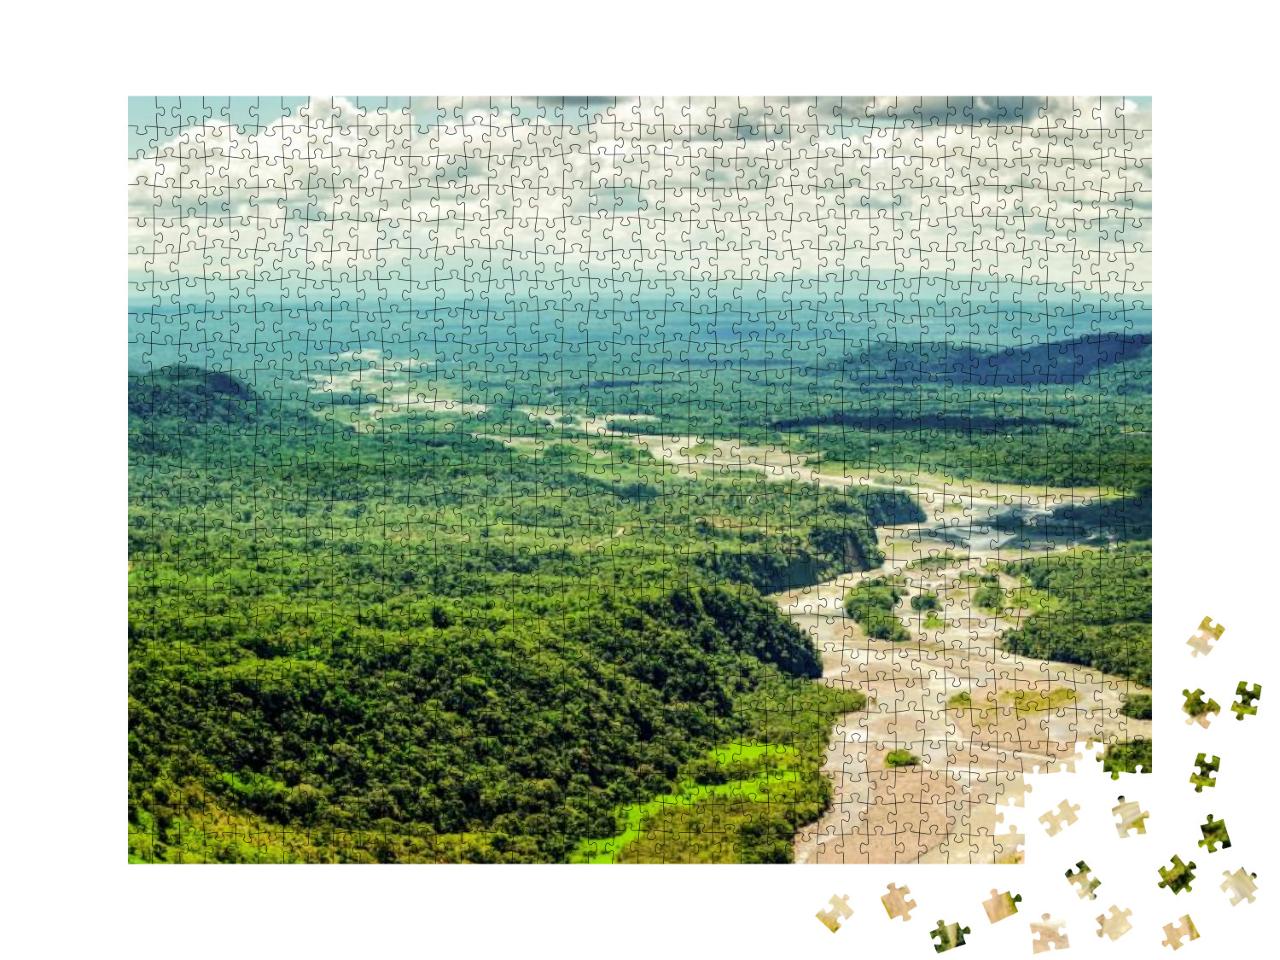 Amazon Rainforest River Forest Rain Aerial Jungle Ecuador... Jigsaw Puzzle with 1000 pieces